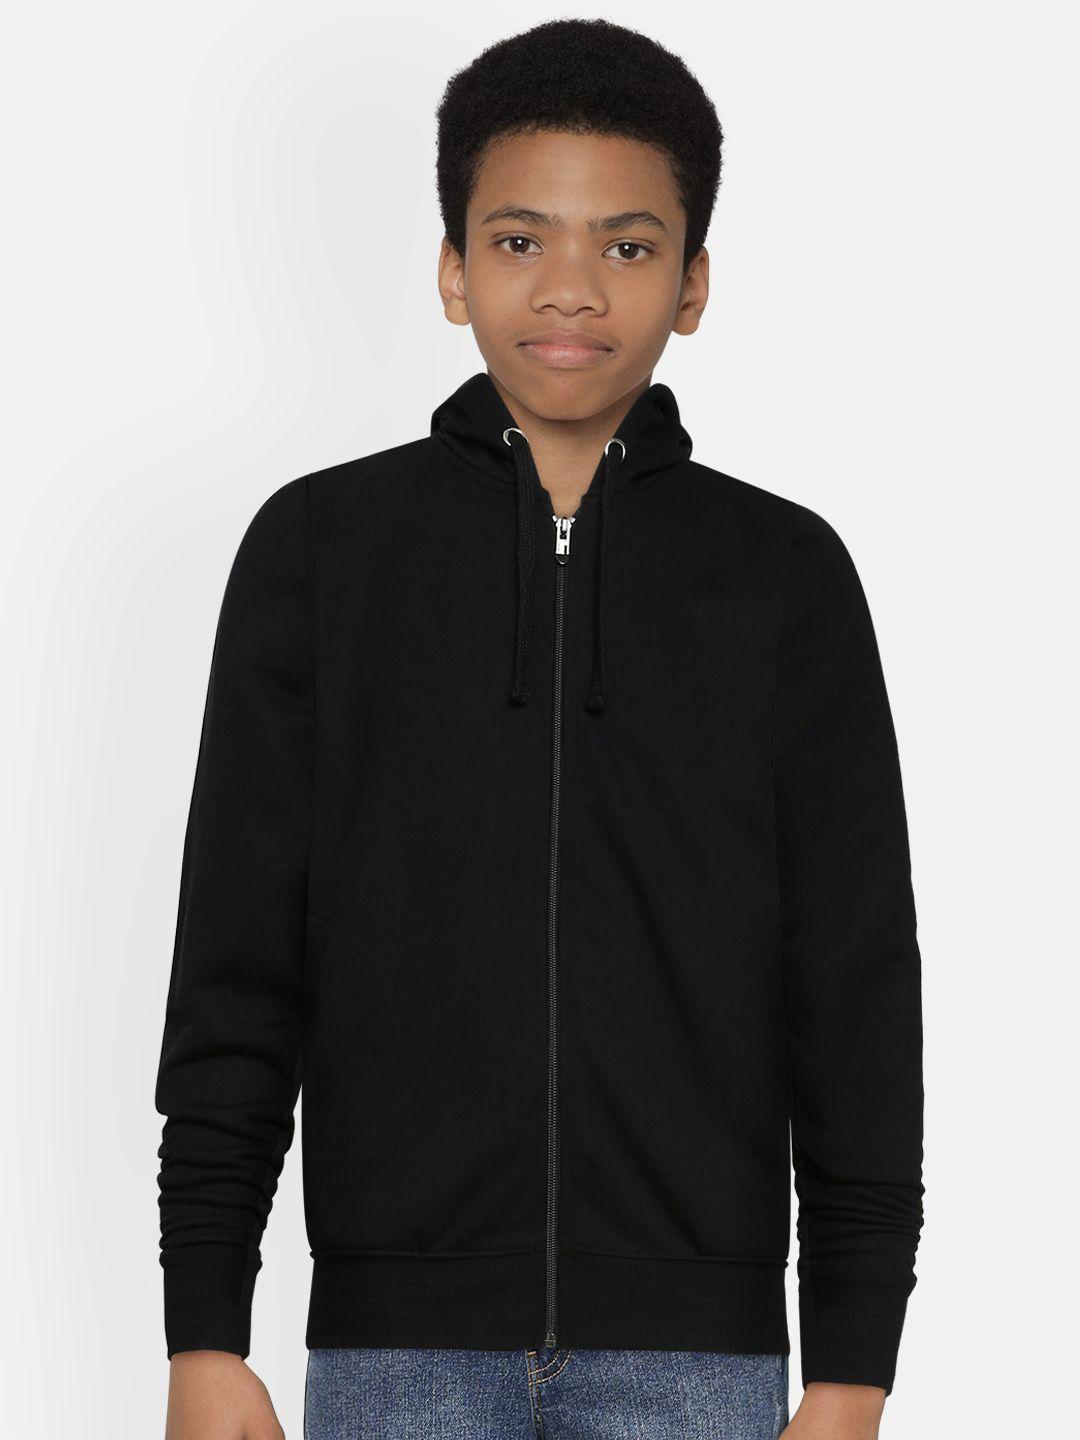 ADBUCKS Boys Black Solid Pure Cotton Hooded Sweatshirt